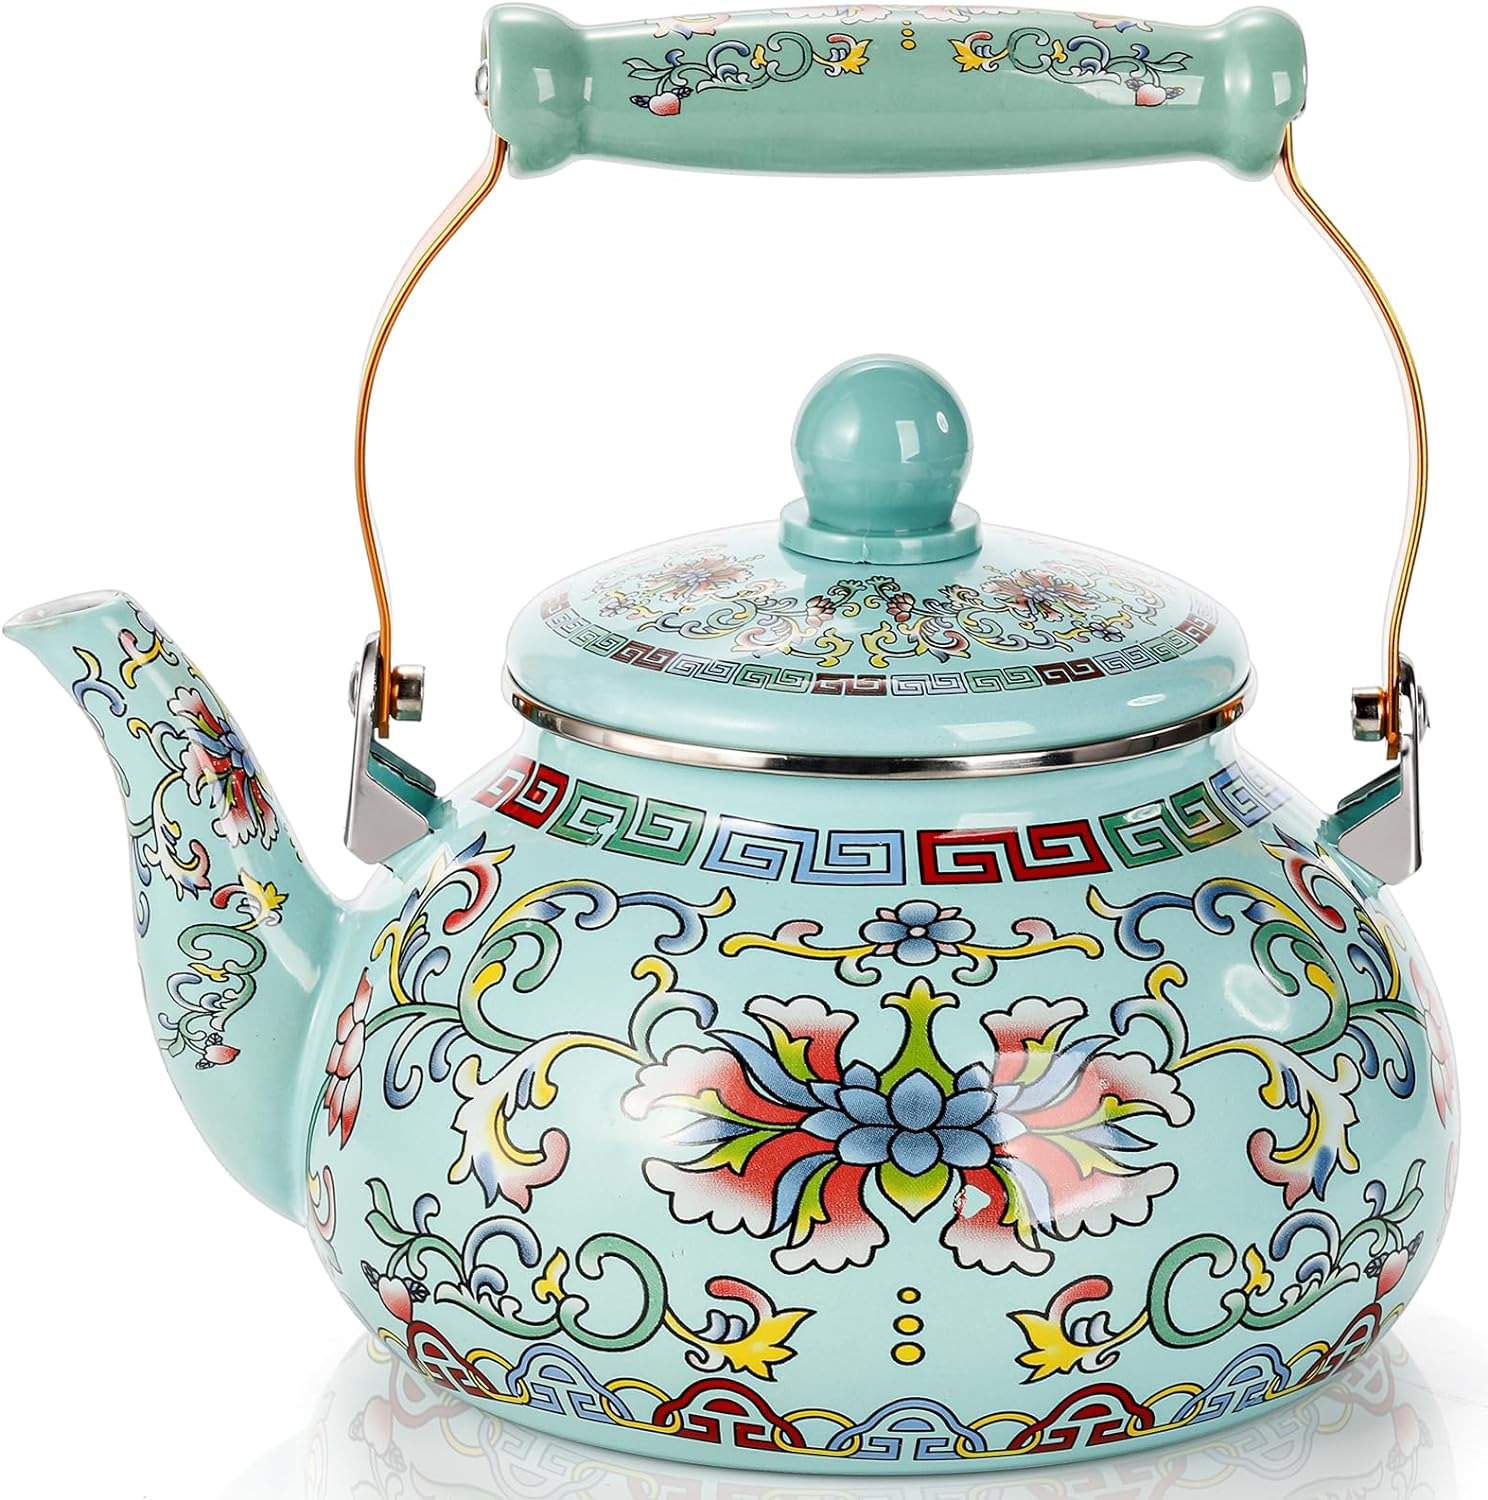 2.6 Quart Vintage Enamel Tea Kettle, Large Enameled Floral Teapot, Flower Enamel